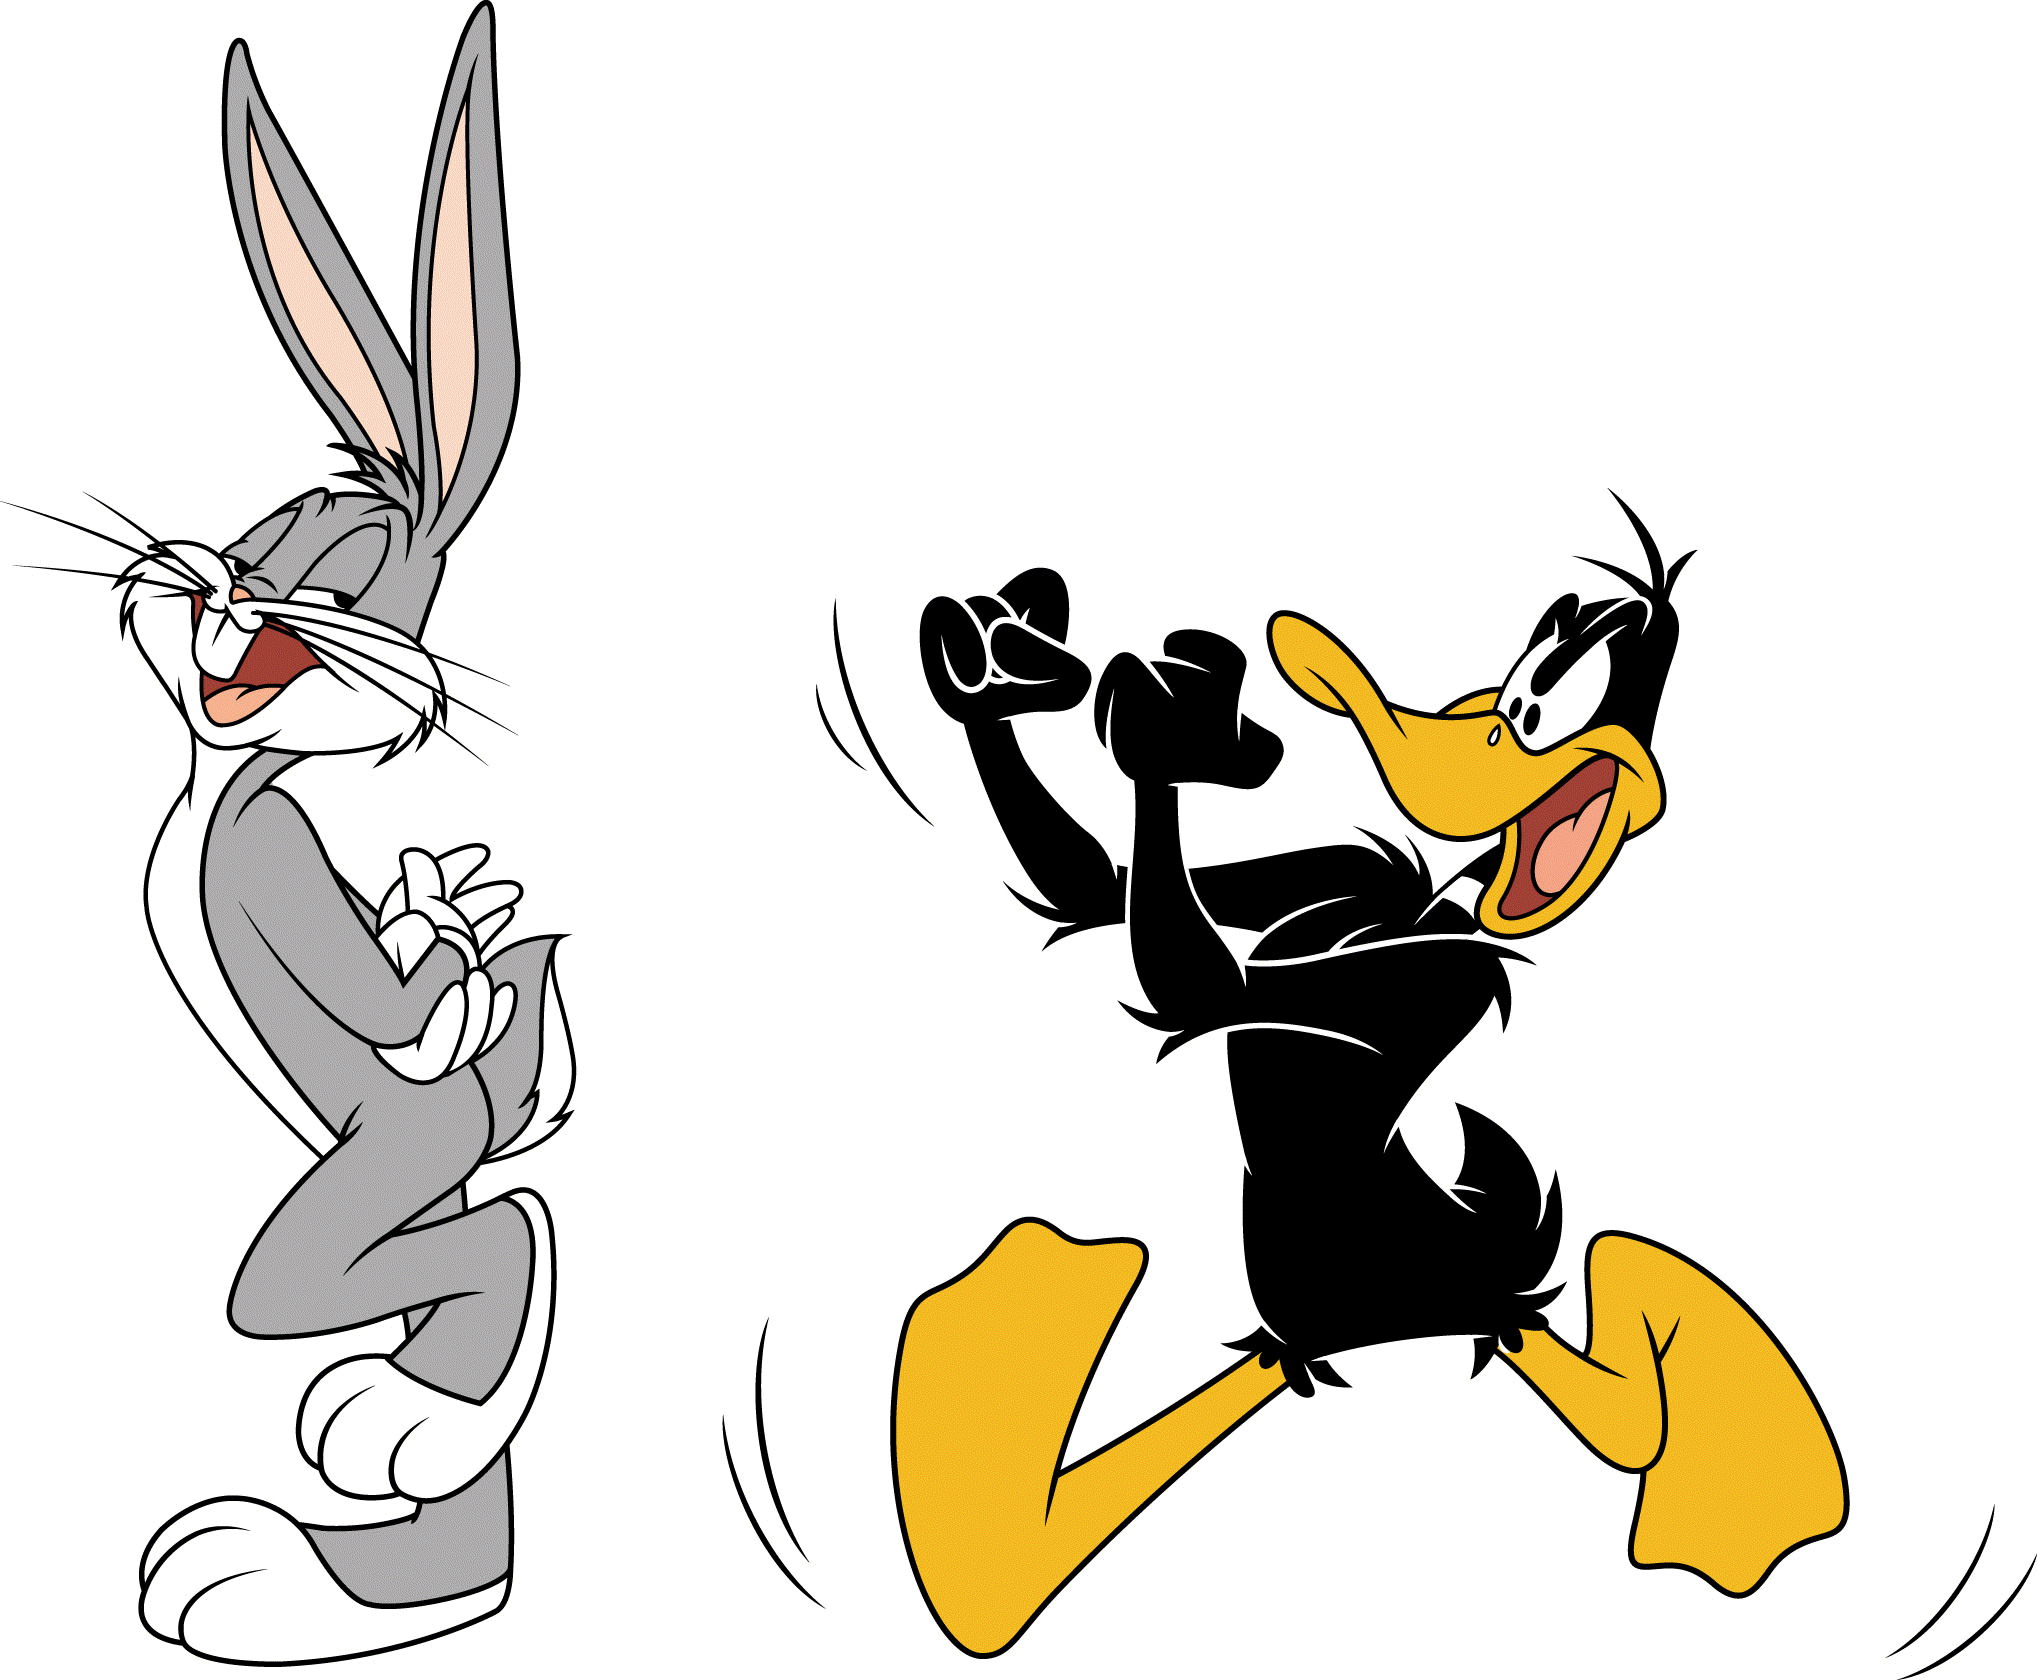 Bugs Bunny Clip Art Image for Desktop - Cartoons Wallpapers